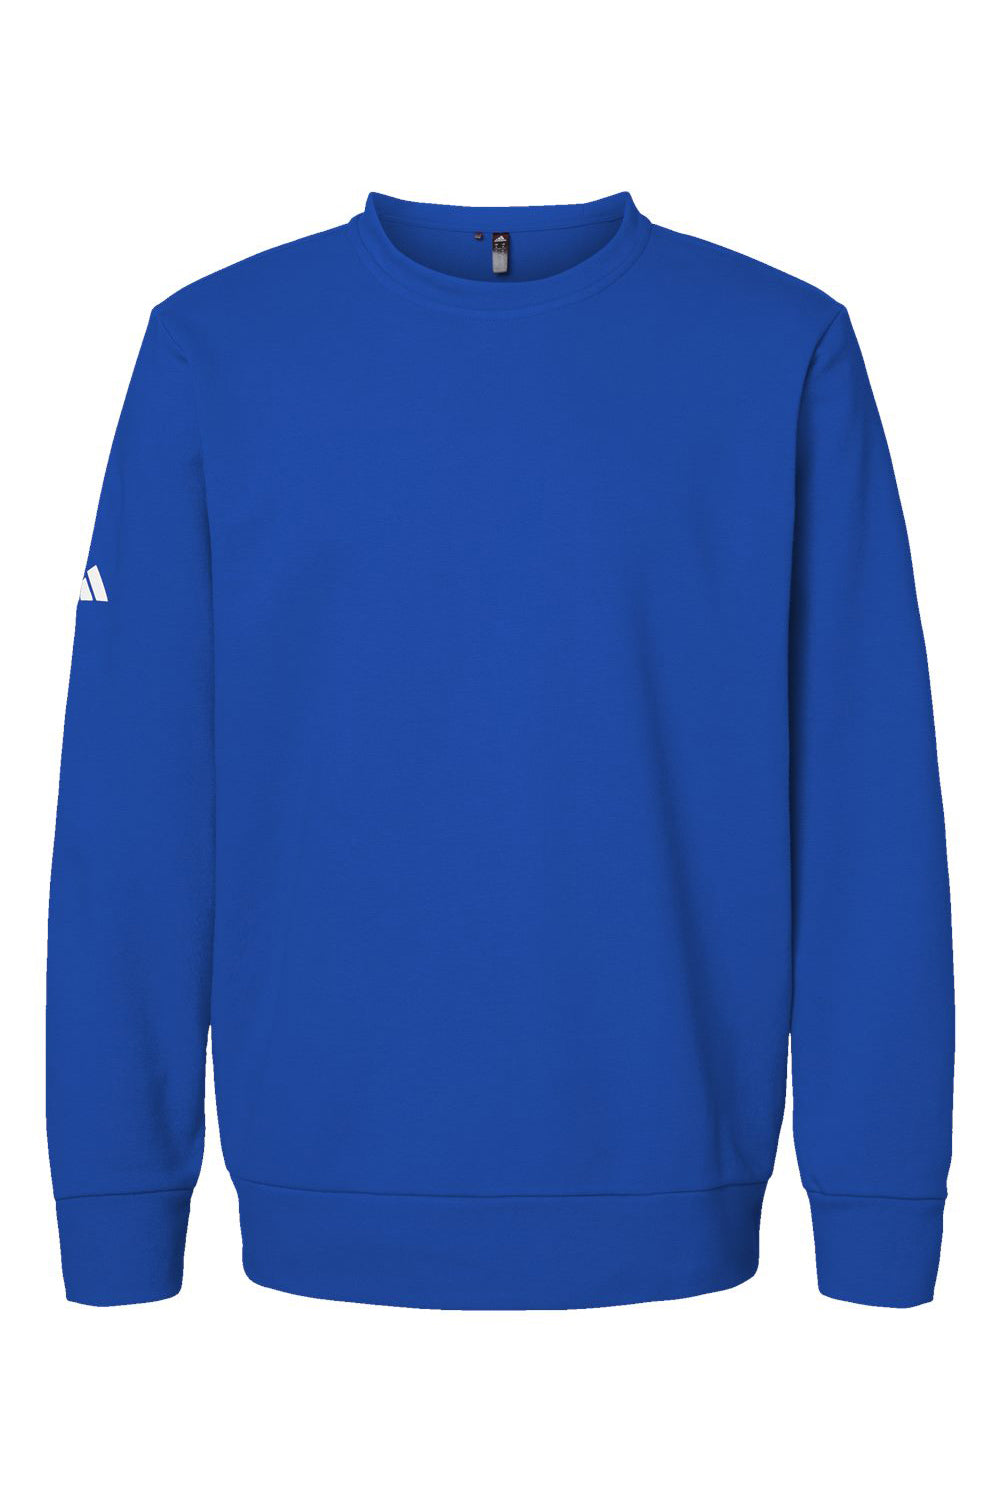 Adidas A434 Mens Fleece Crewneck Sweatshirt Collegiate Royal Blue Flat Front